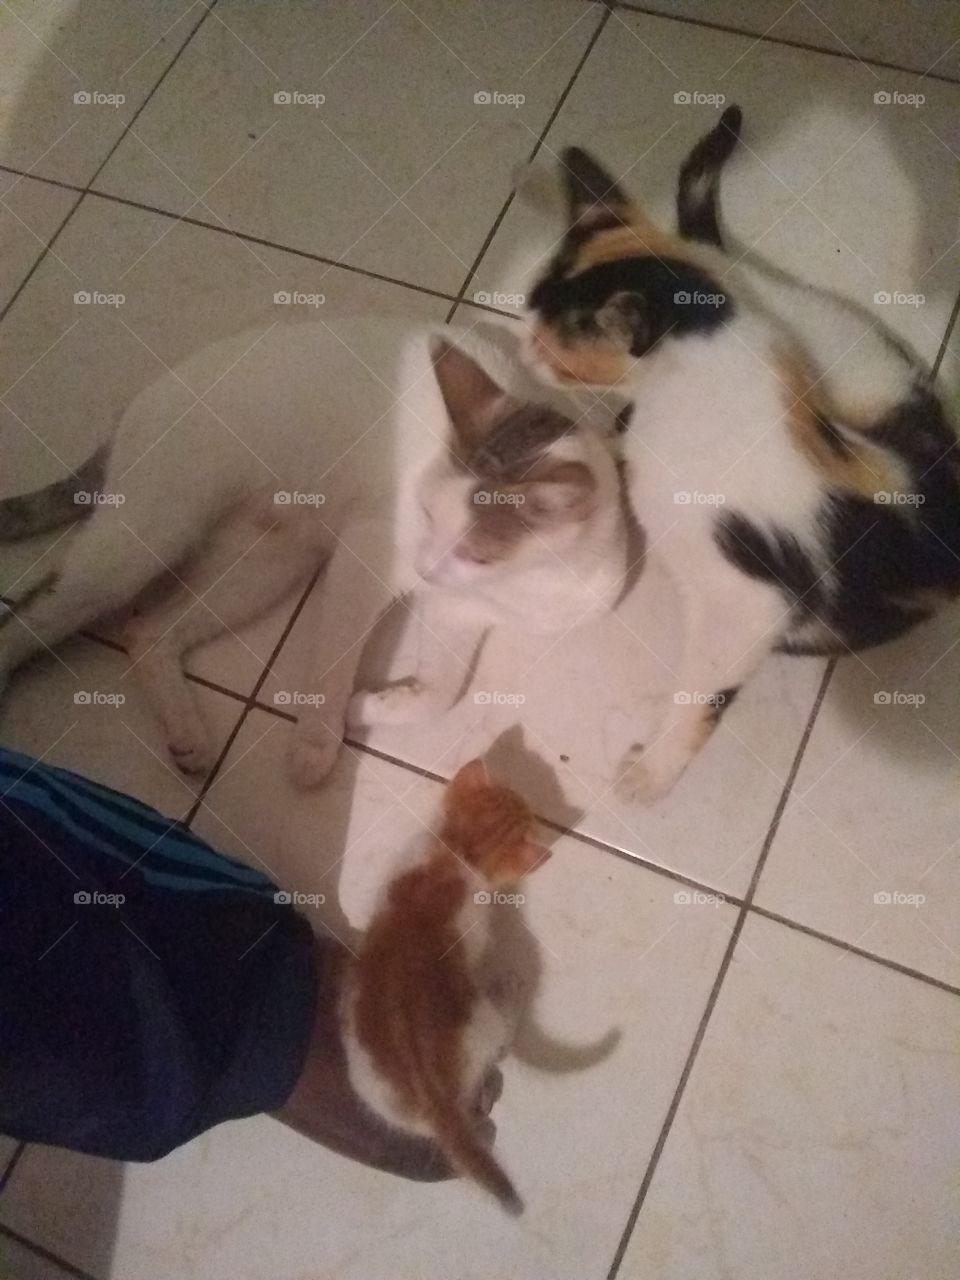 Cat family